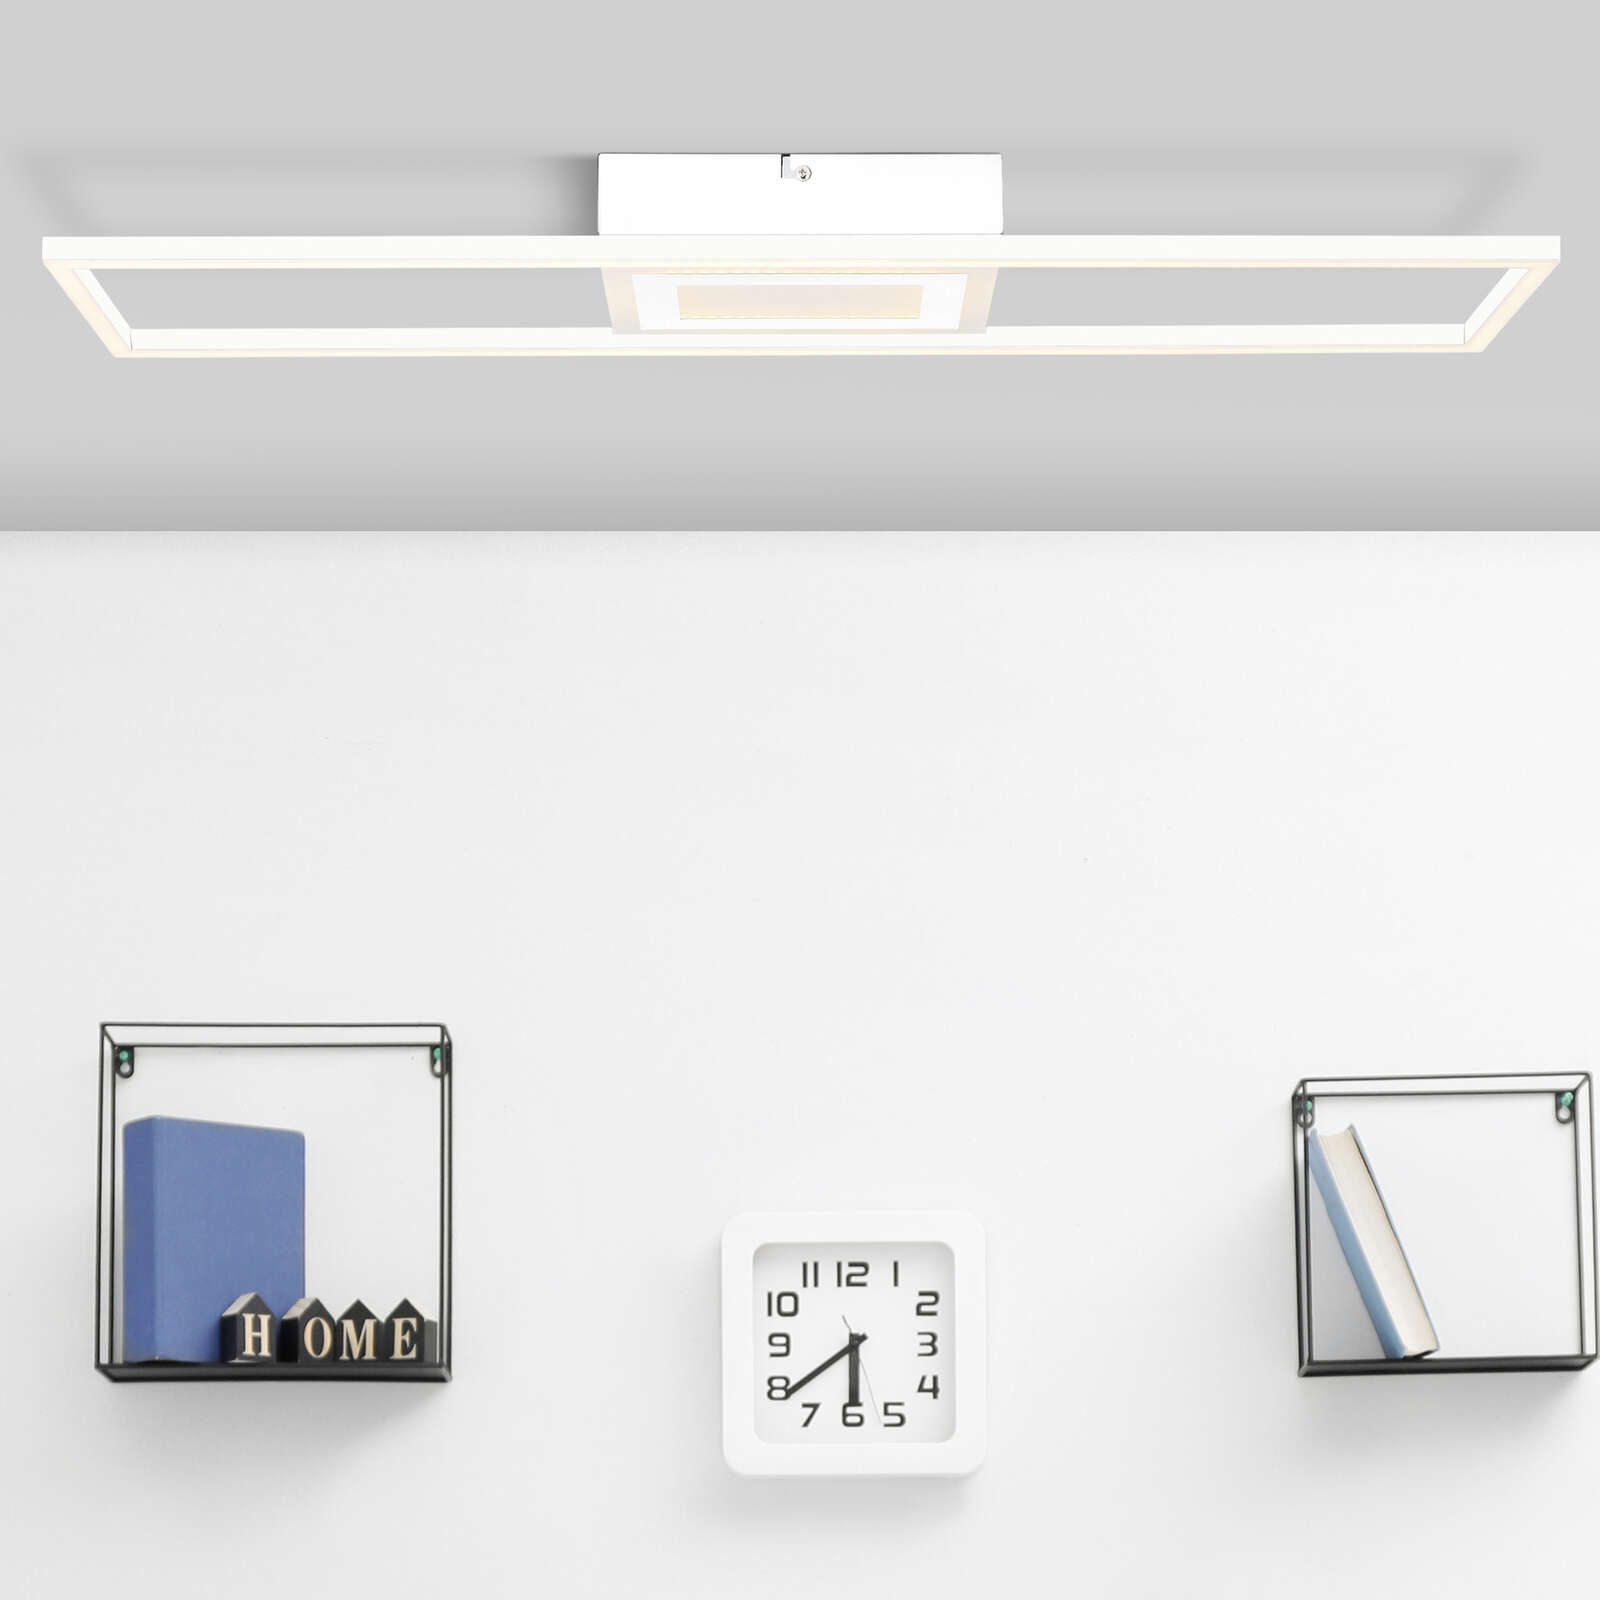             Kunststof plafondlamp - Benedikt 2 - Wit
        